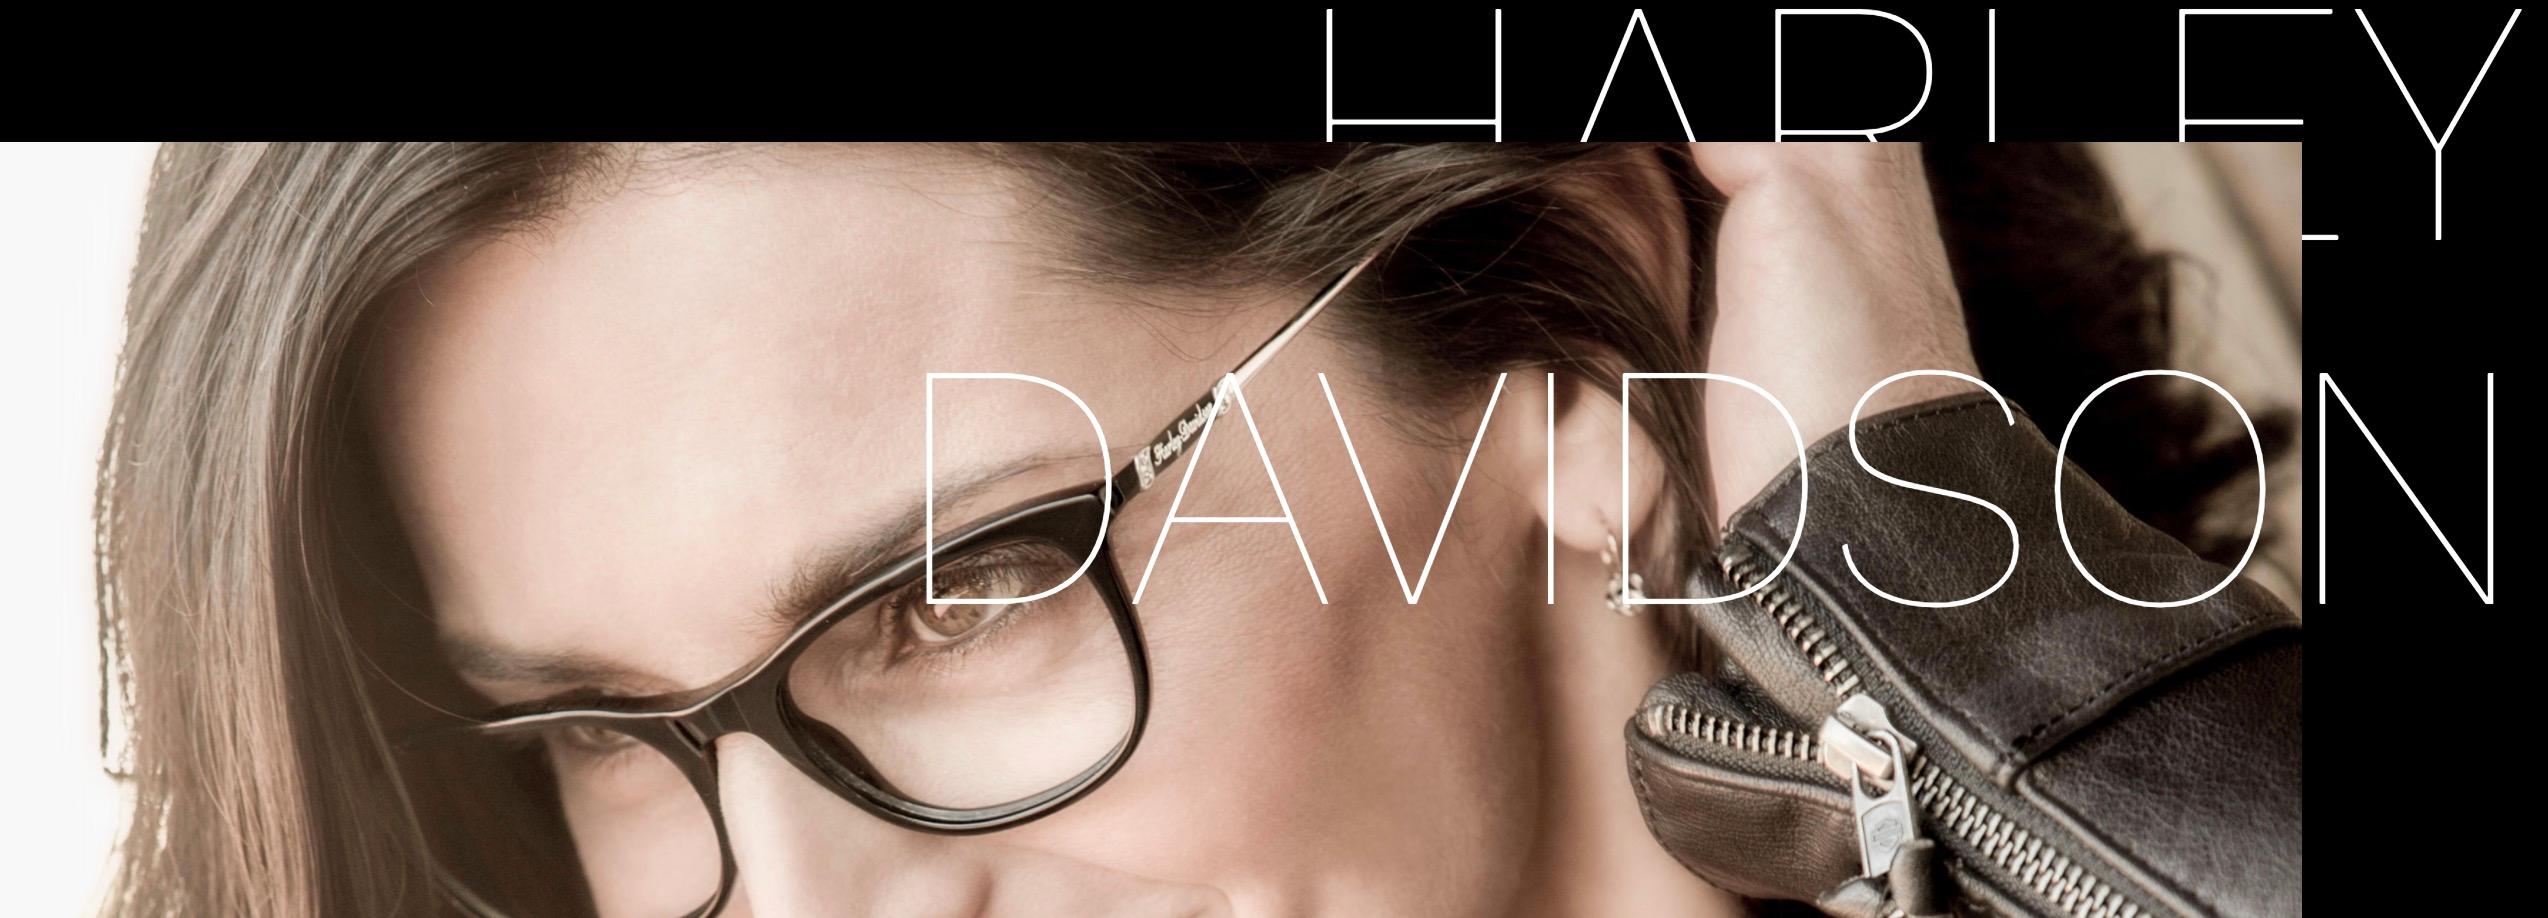 Harley Davidson Glasses